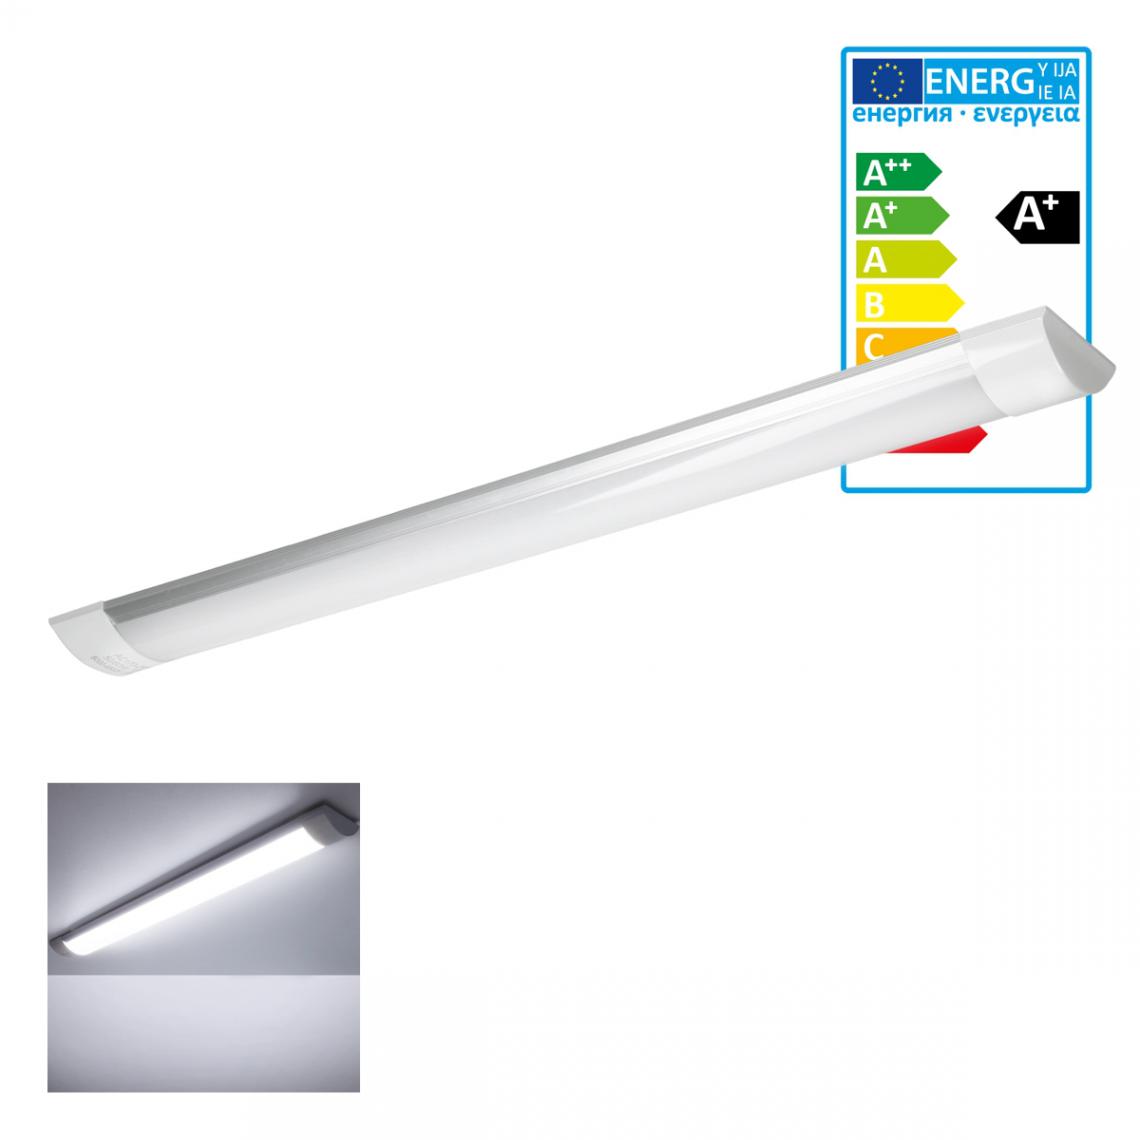 Ecd Germany - Set 8x LED batten tube plafond 18W 60cm blanc froid 220-240V en aluminium - Tubes et néons